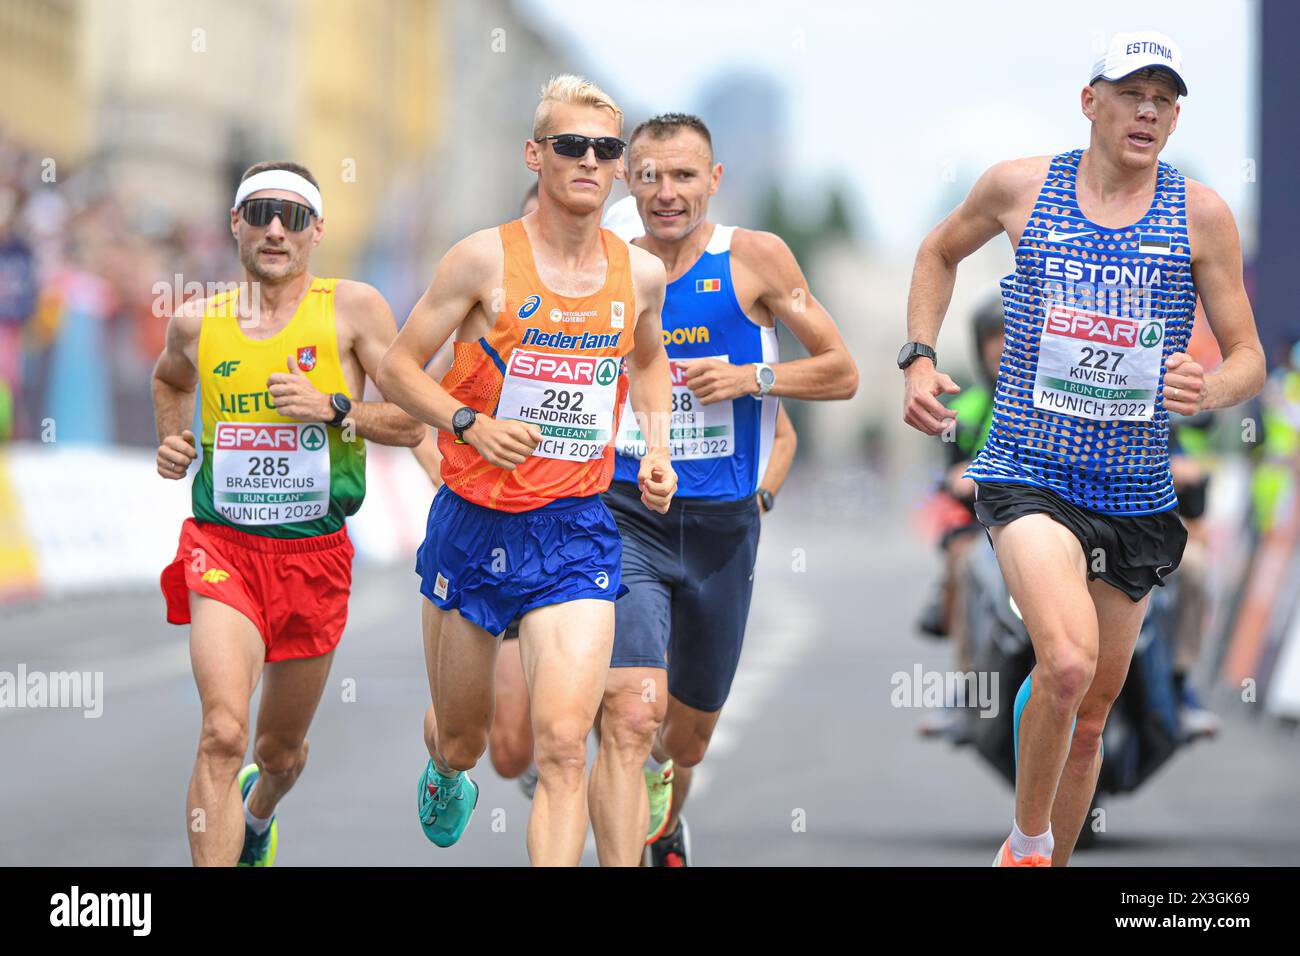 Kaur Kivistik (Estonia), Tom Hendrikse (Netherlands). Men's Marathon. European Championships Munich 2022. Stock Photo